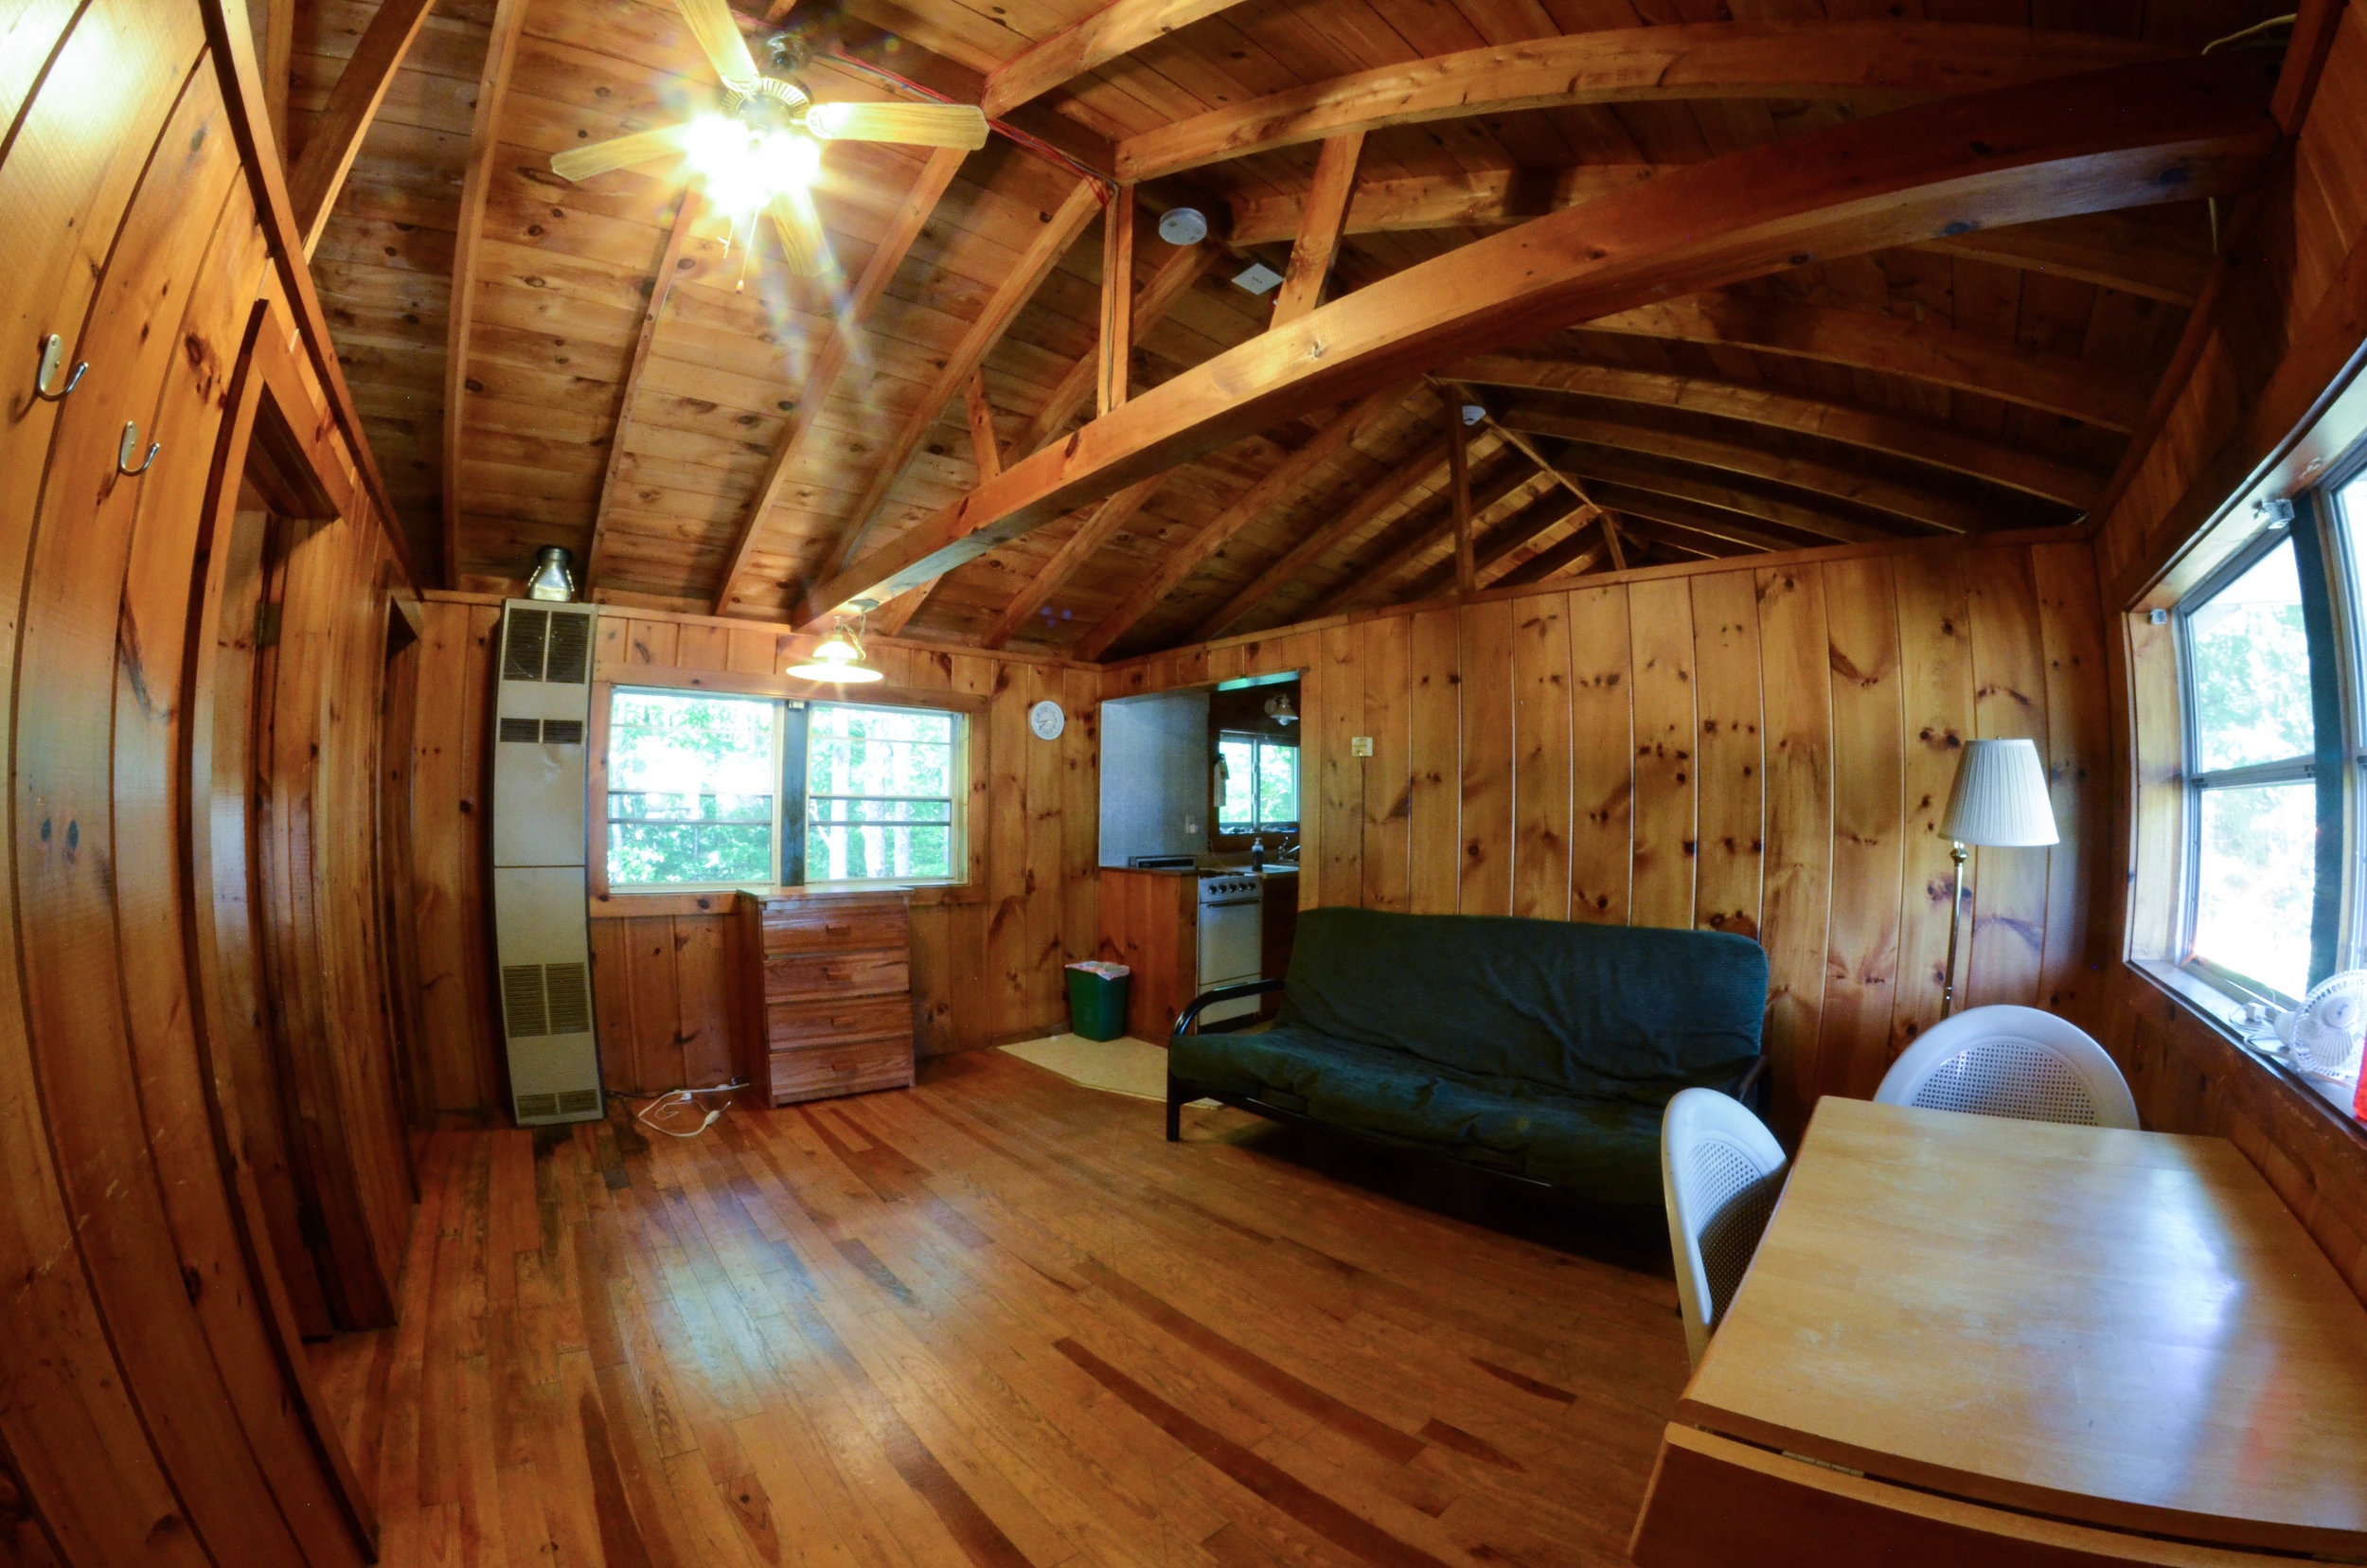 Rental Property Cabin Interior New Hampshire